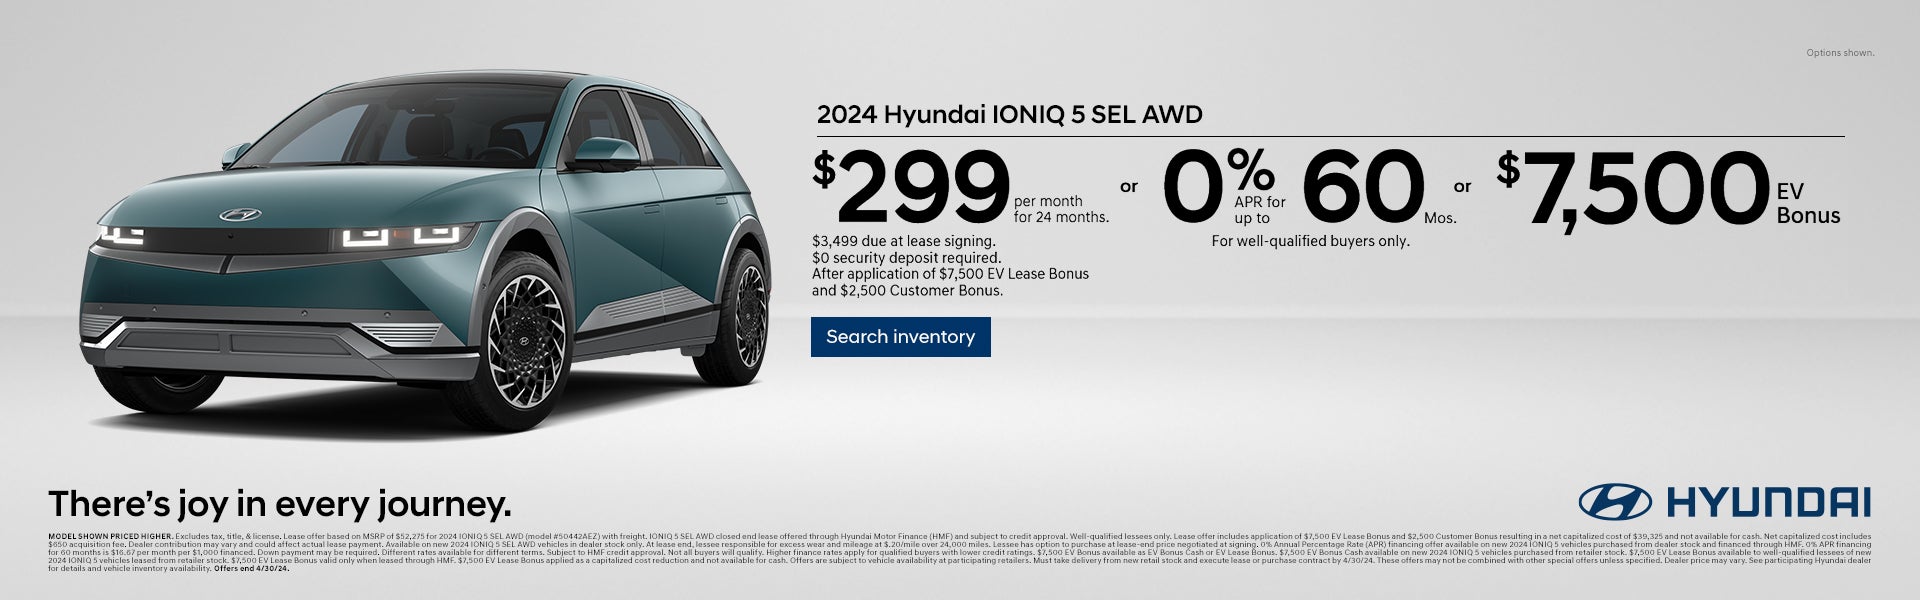 2024 Hyundai IONIQ 5 Lease Promo